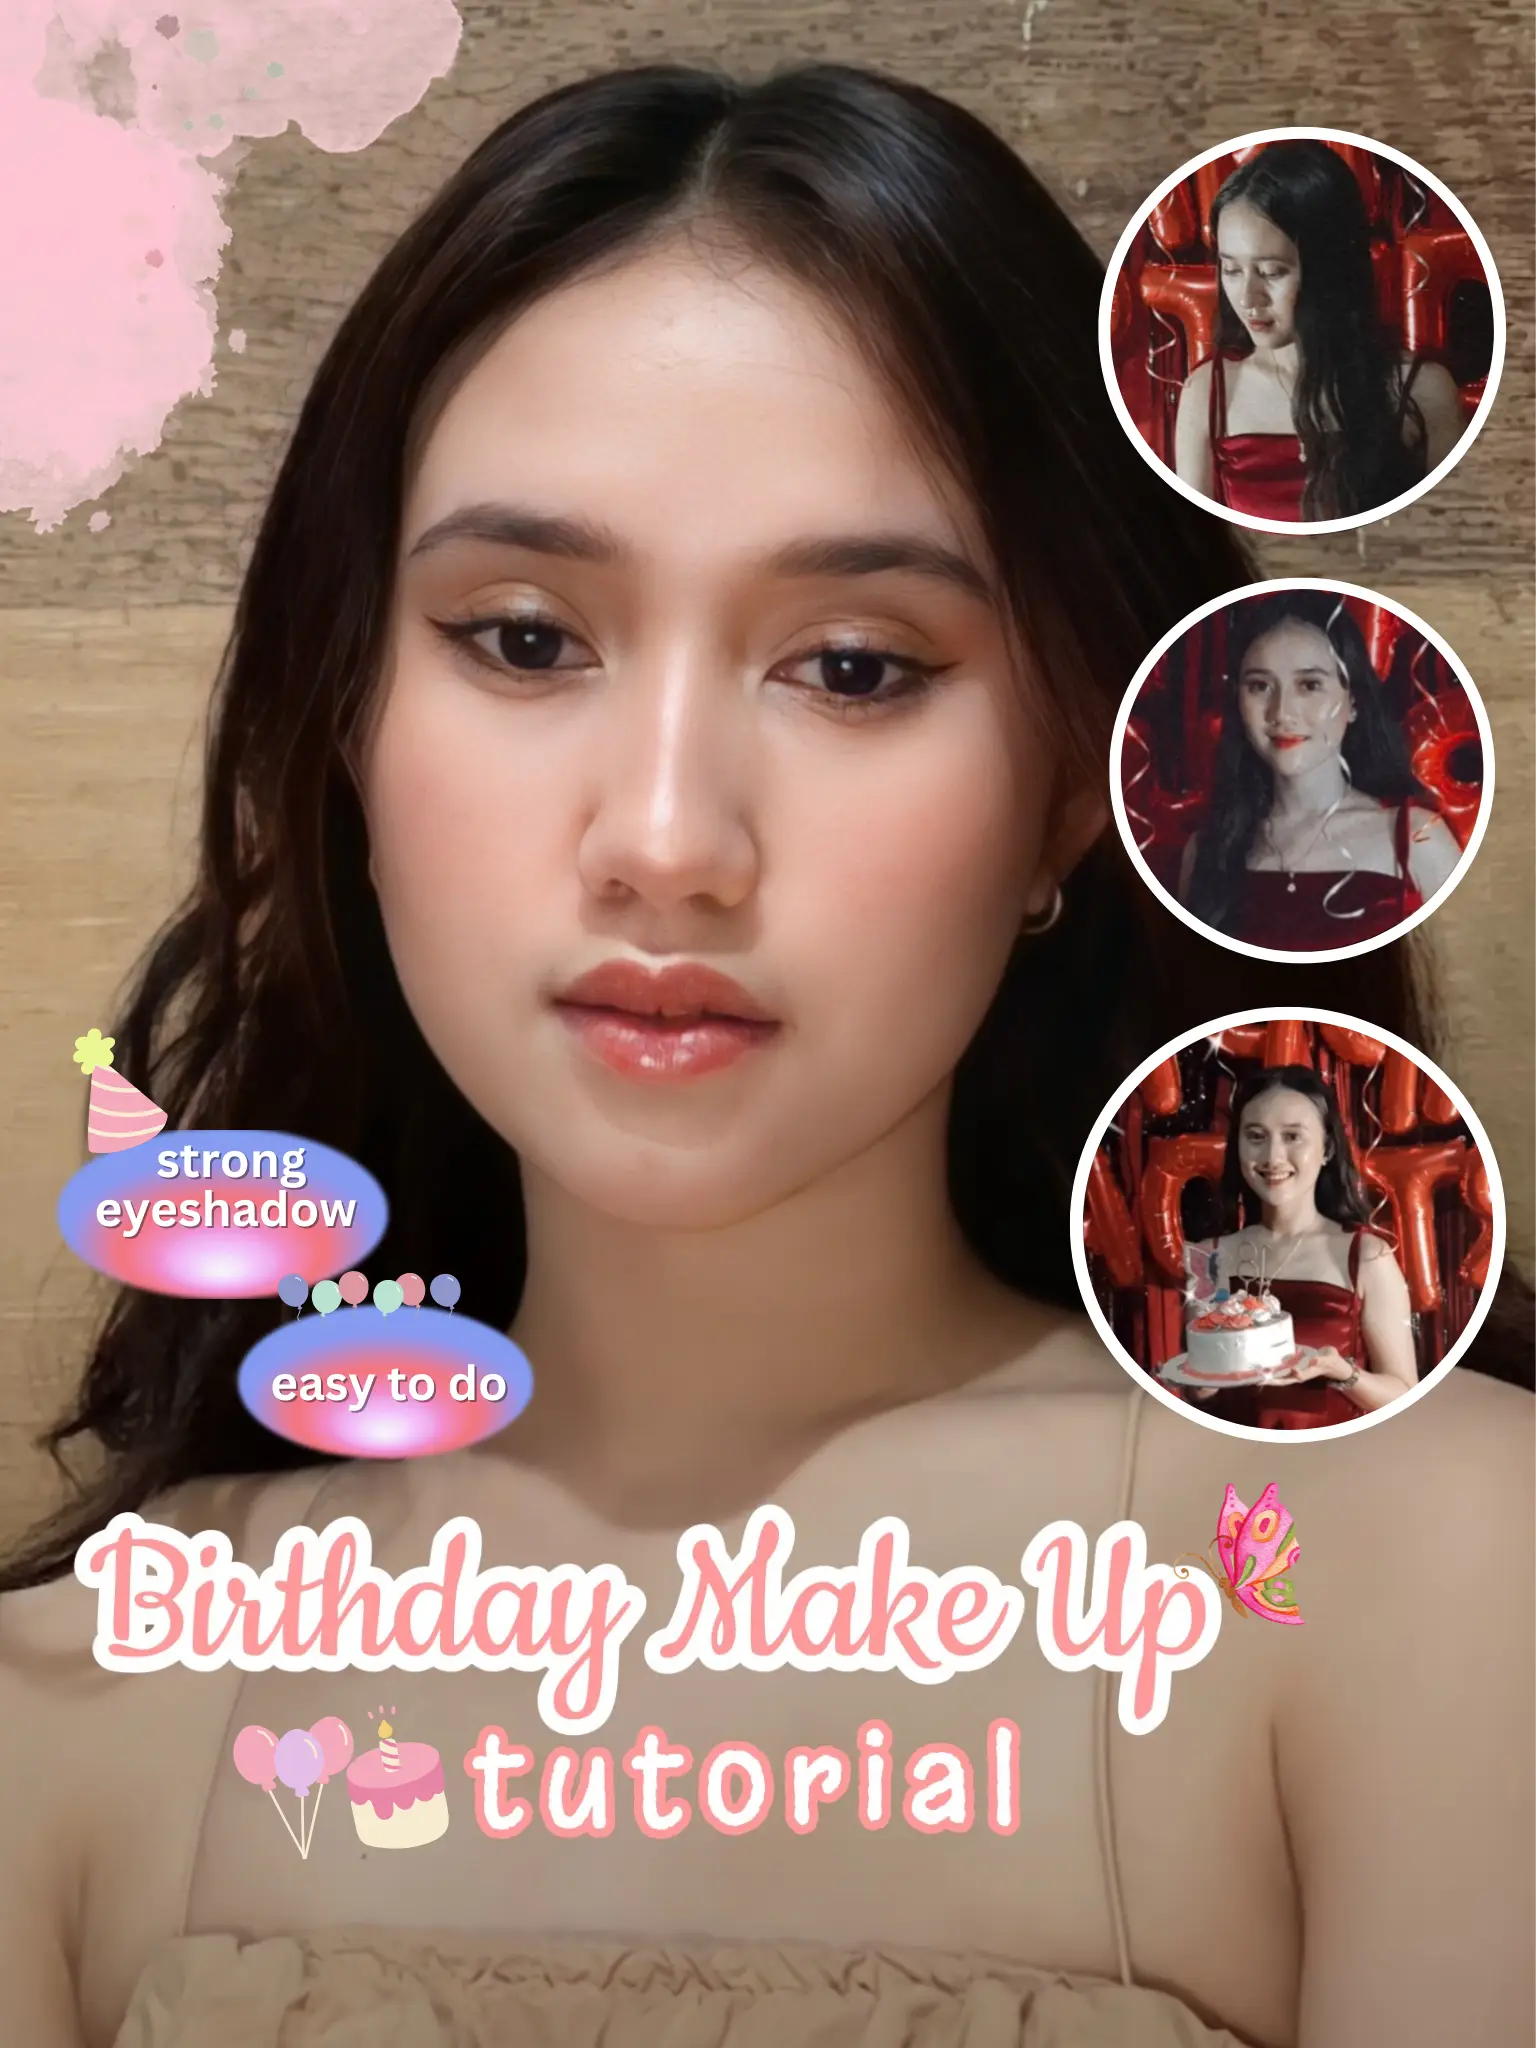 19 Top Birthday Party Makeup Essentials